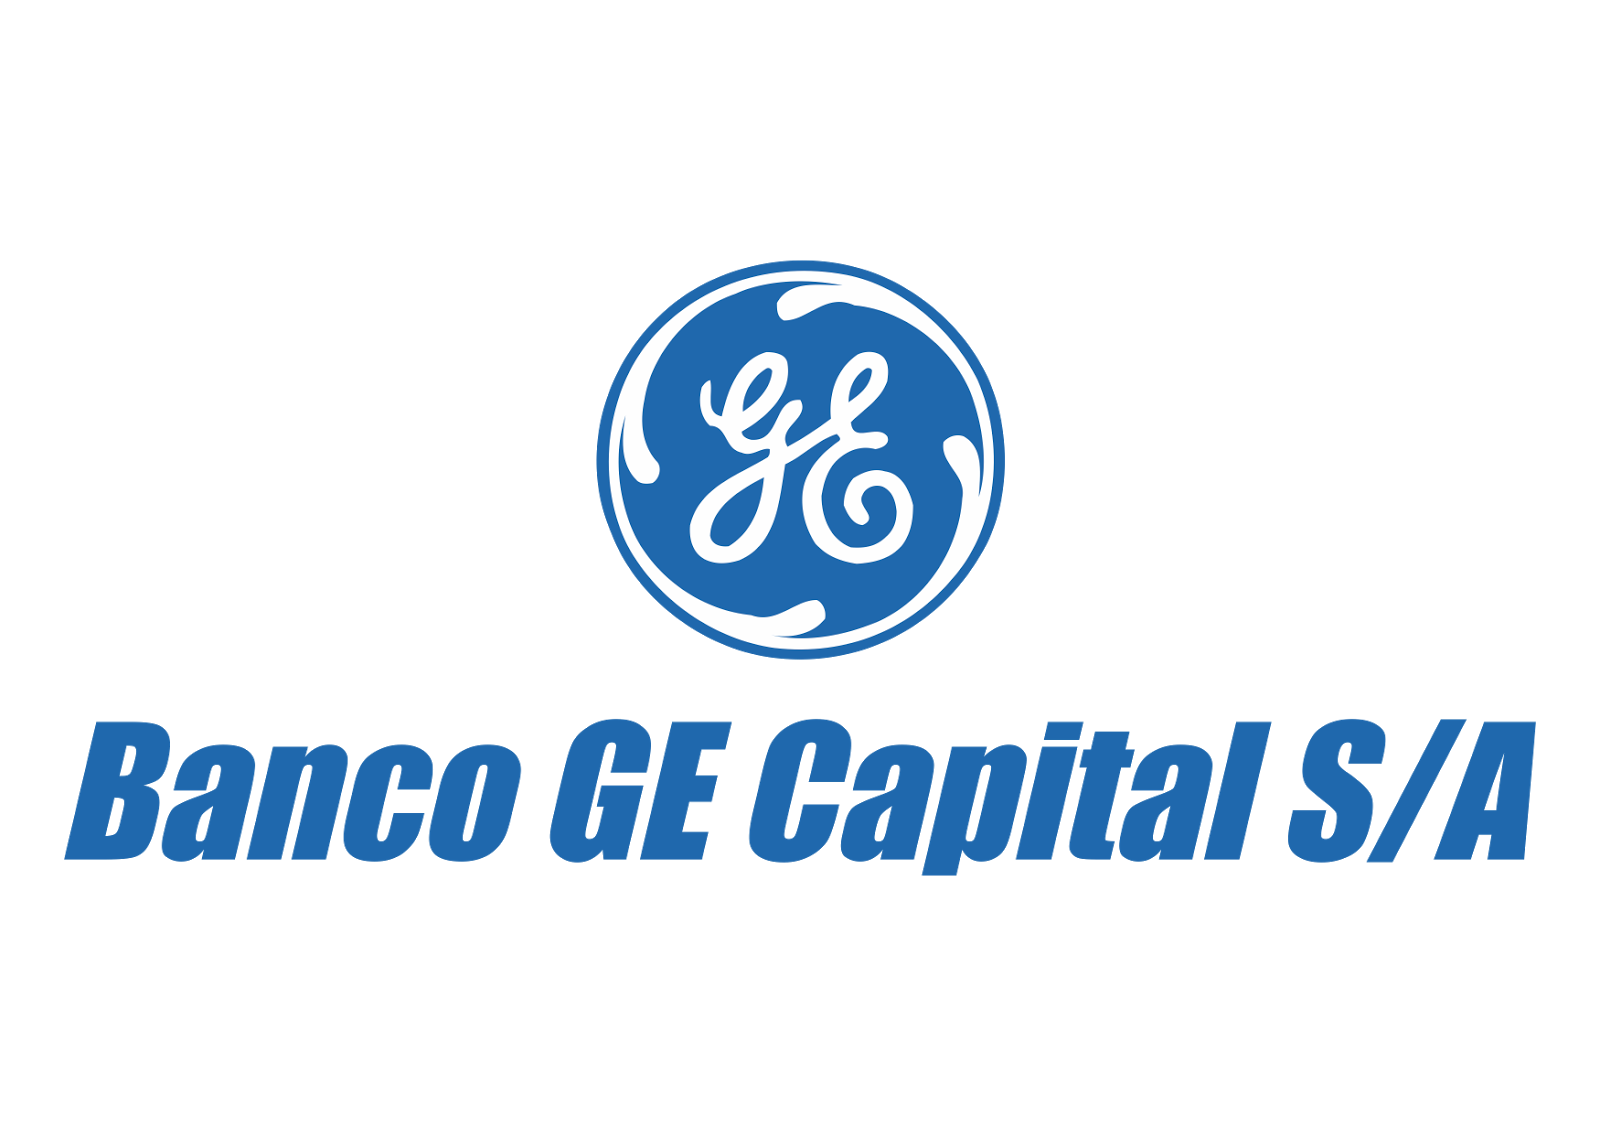 BANCO GE Logo photo - 1